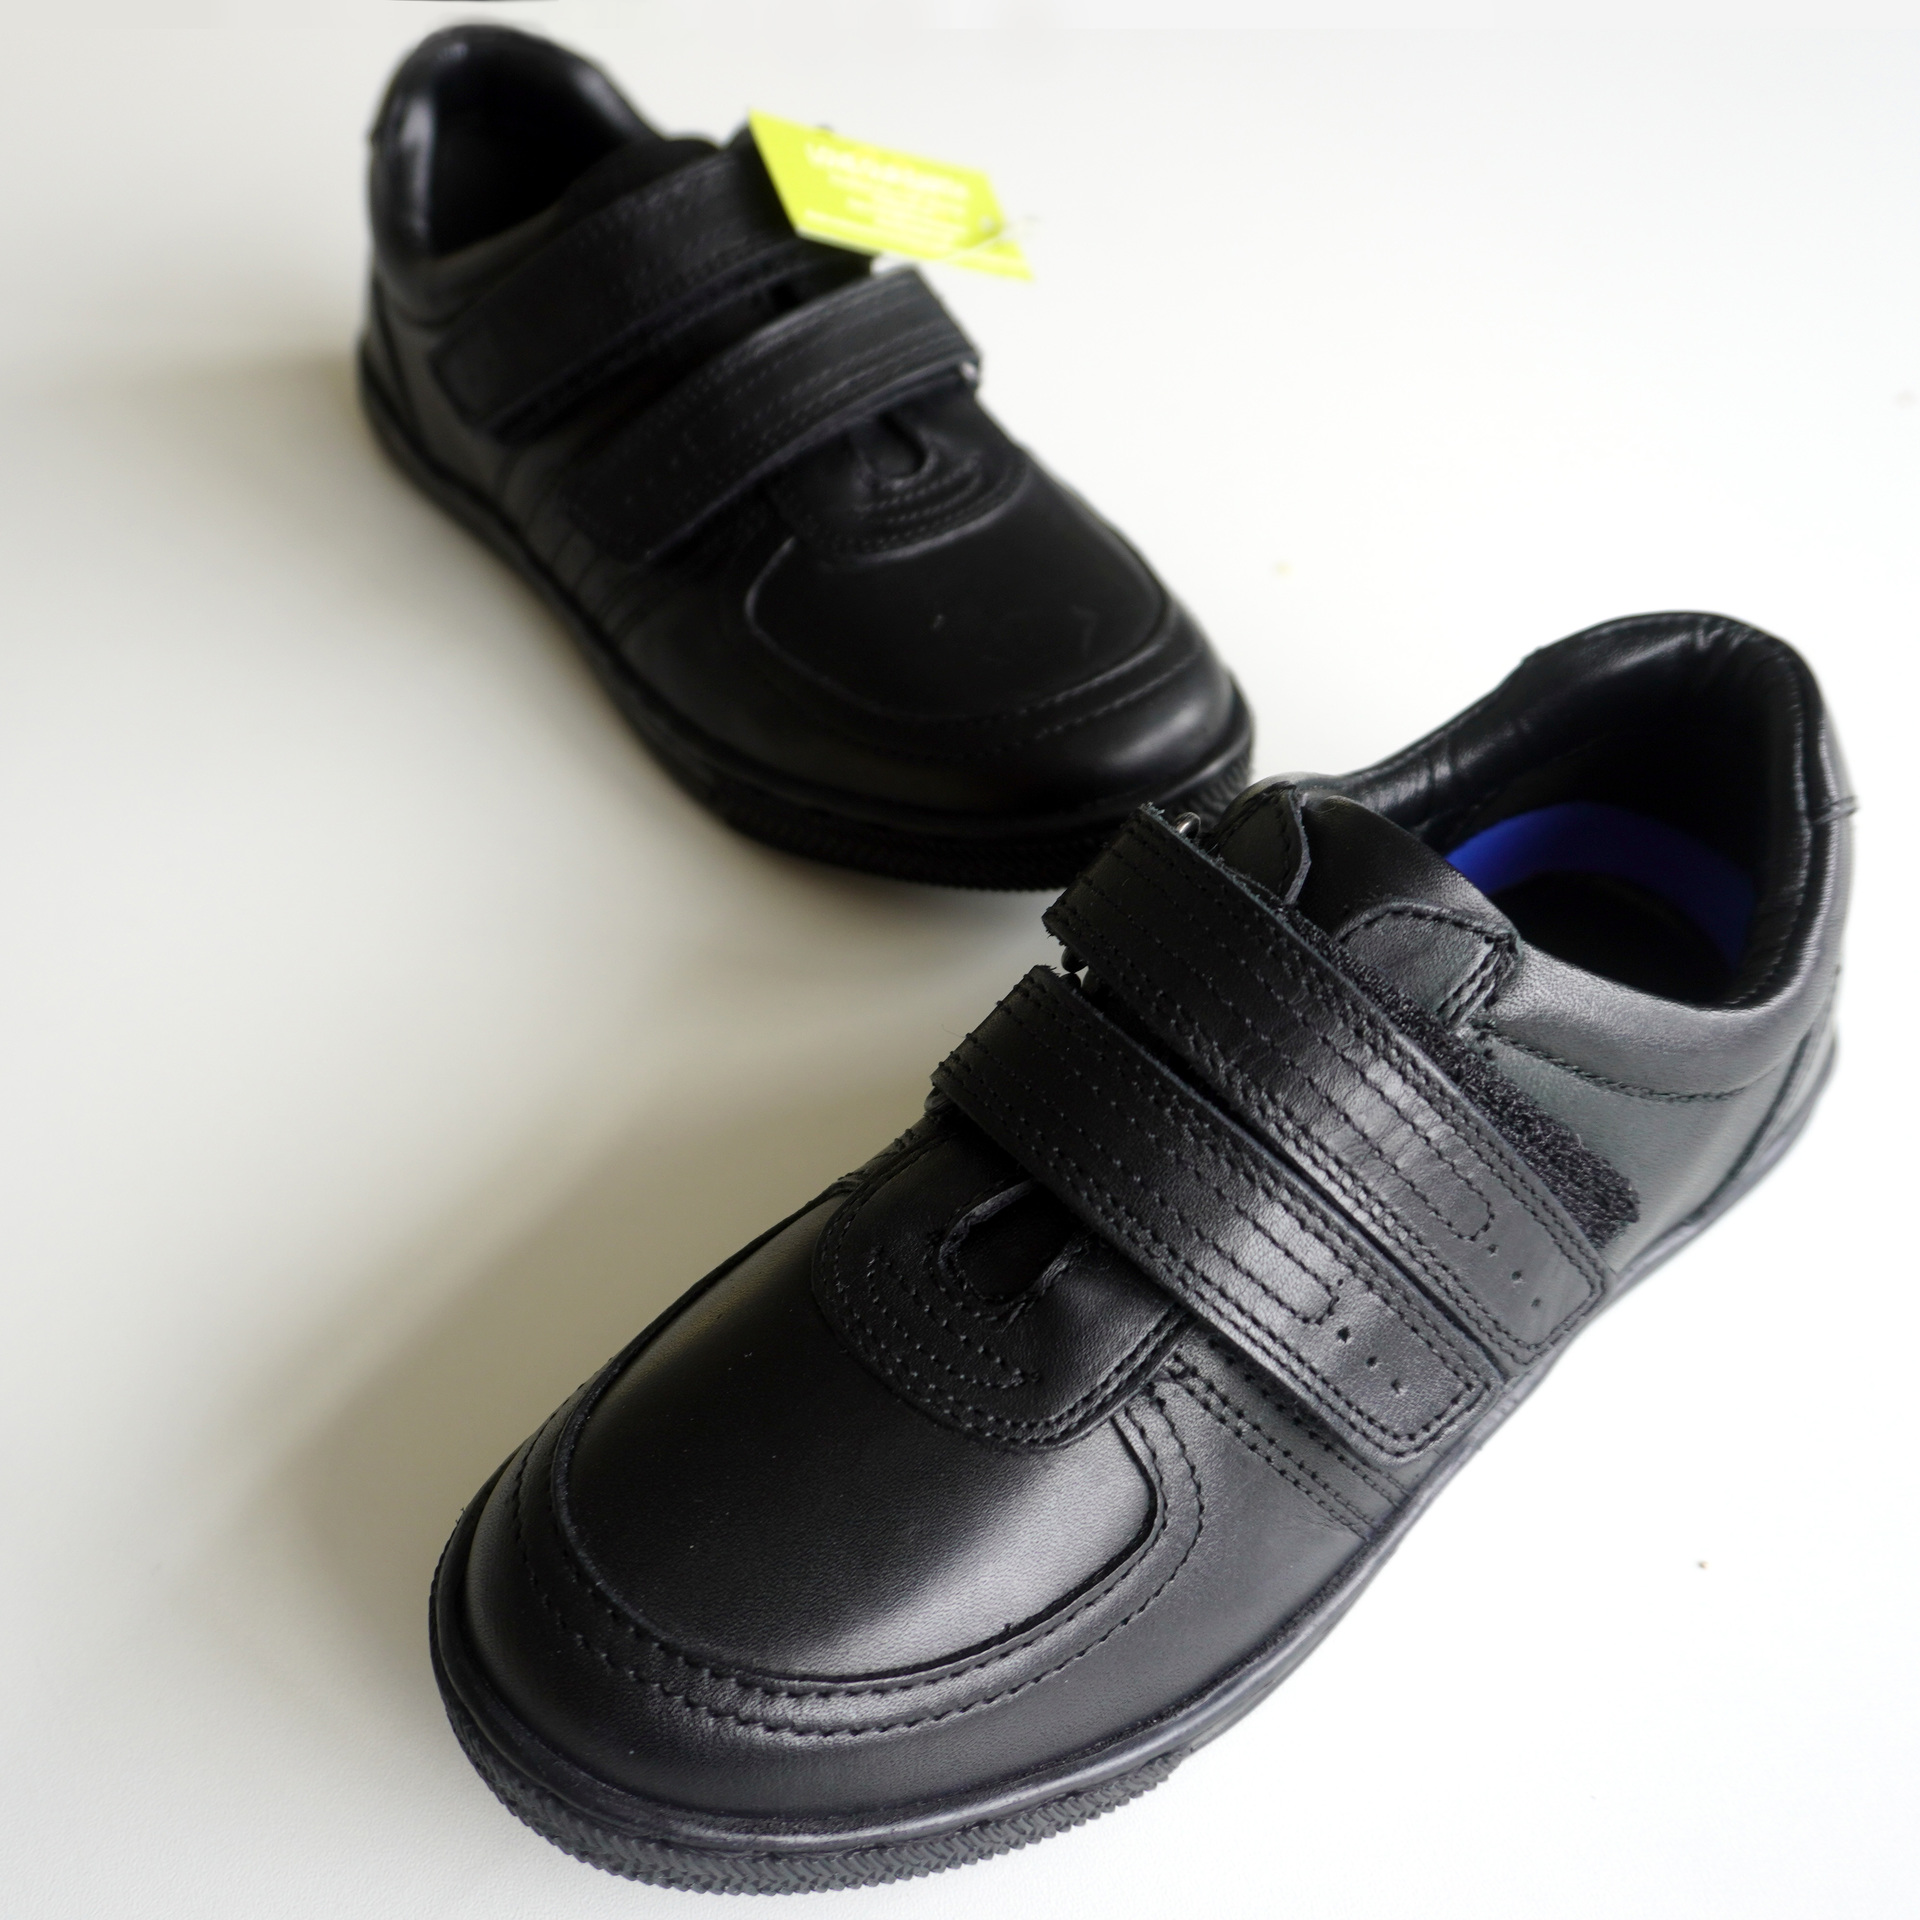 Micro-Fresh school shoes